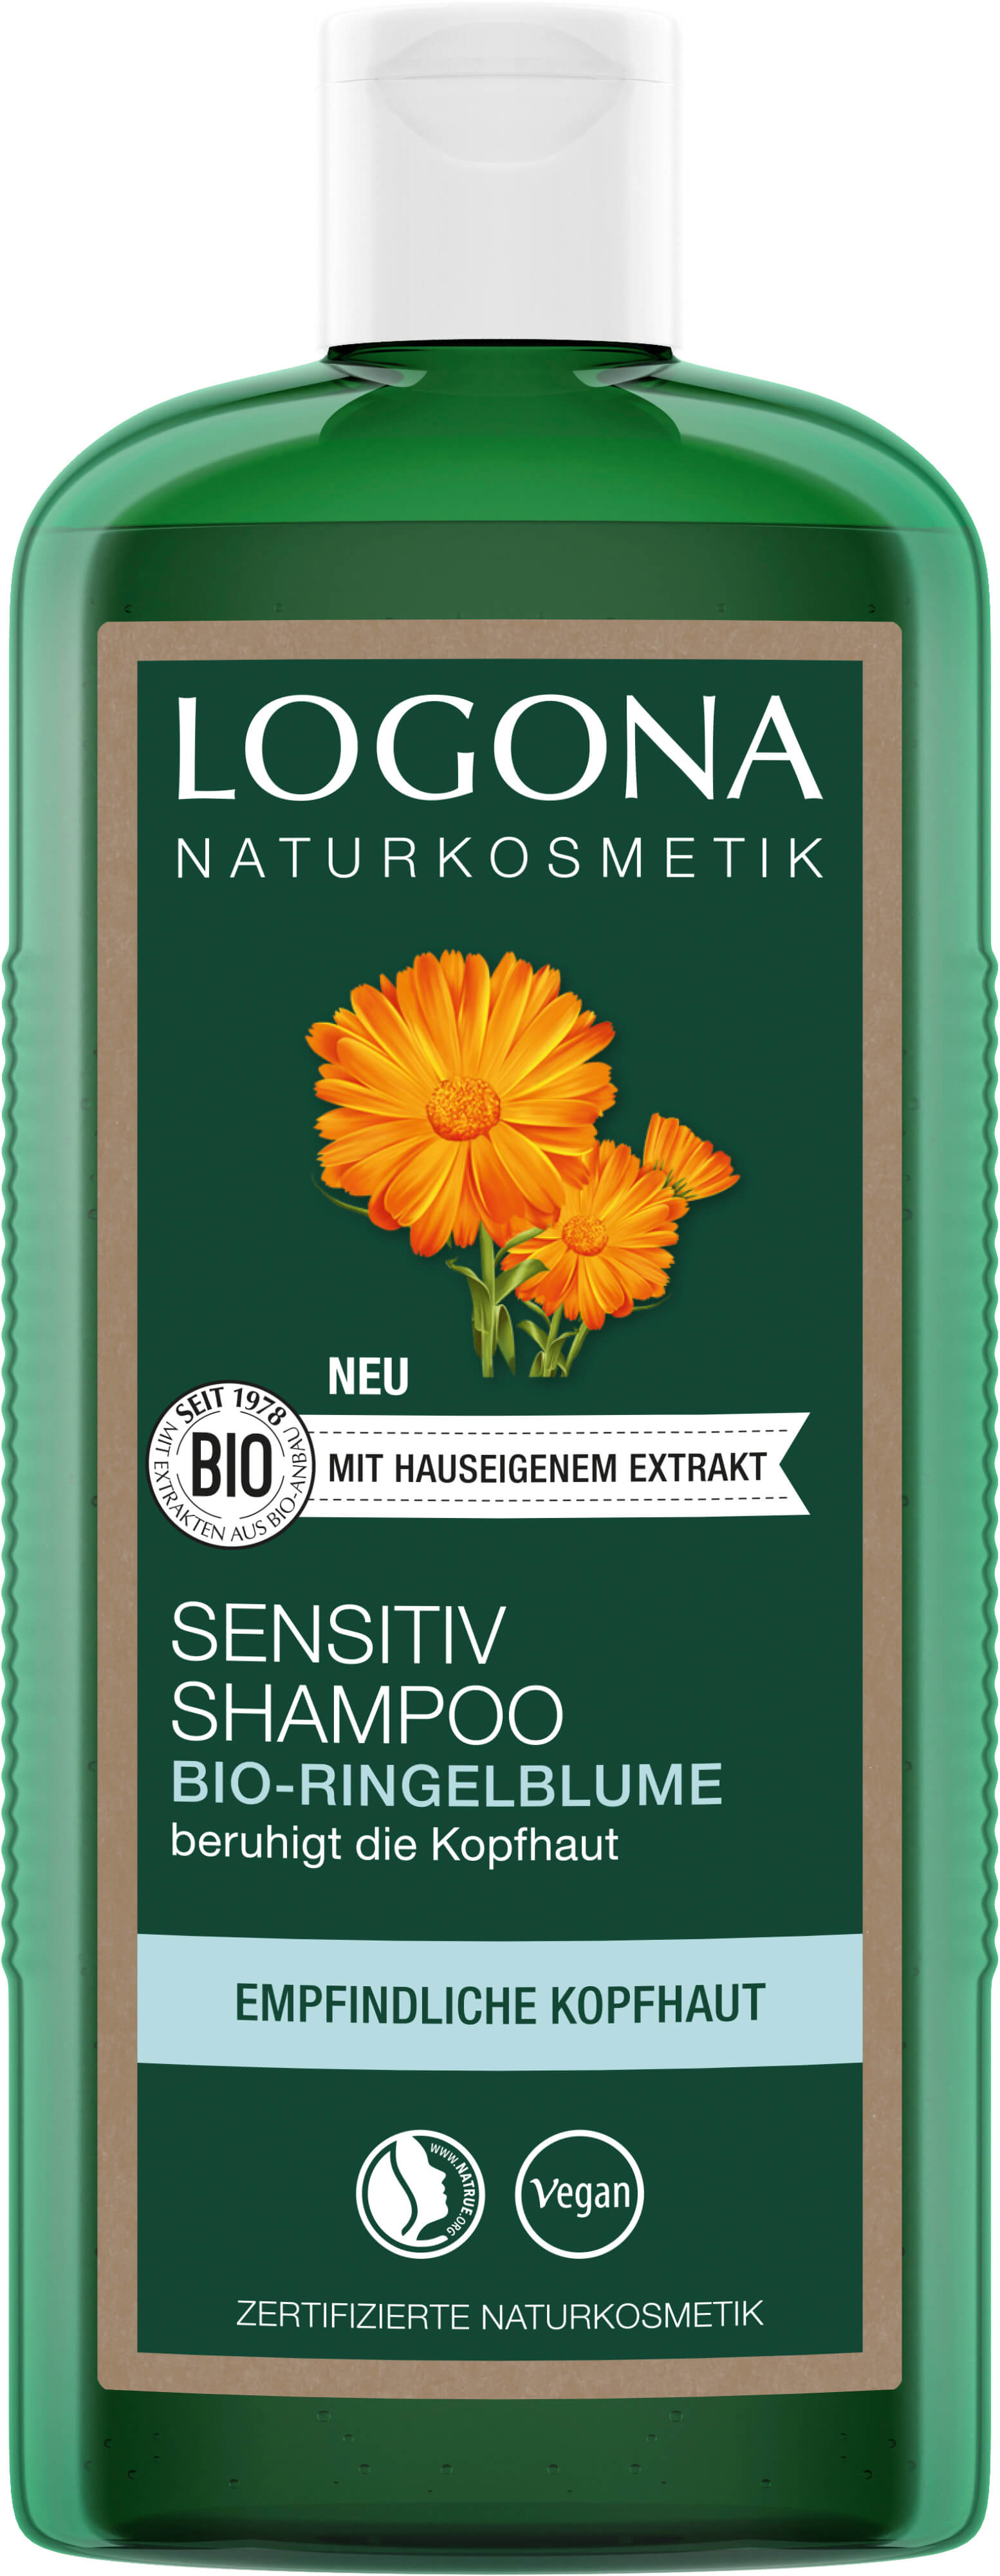 Sensitive Shampoo Natural Organic Acacia LOGONA Cosmetics |